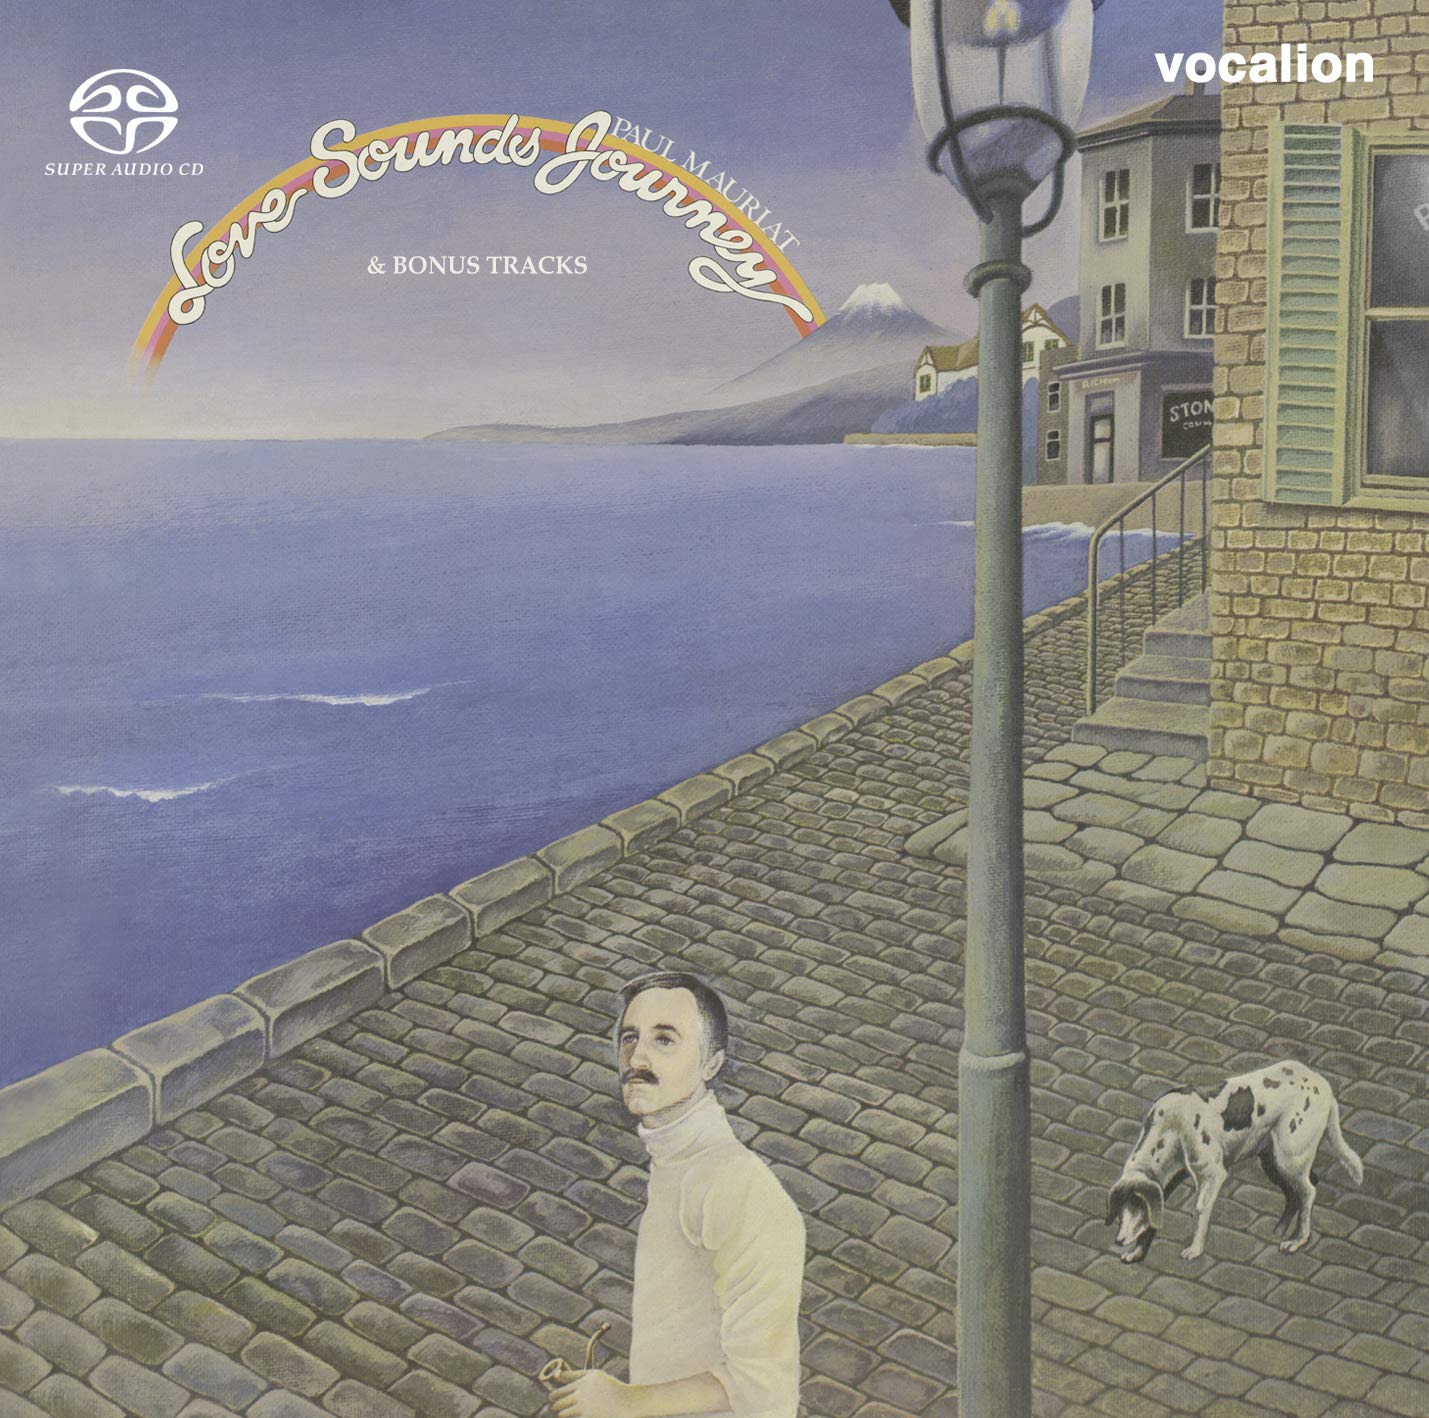 Paul Mauriat - Love Sounds Journey & bonus tracks (1976/2020) SACD ISO